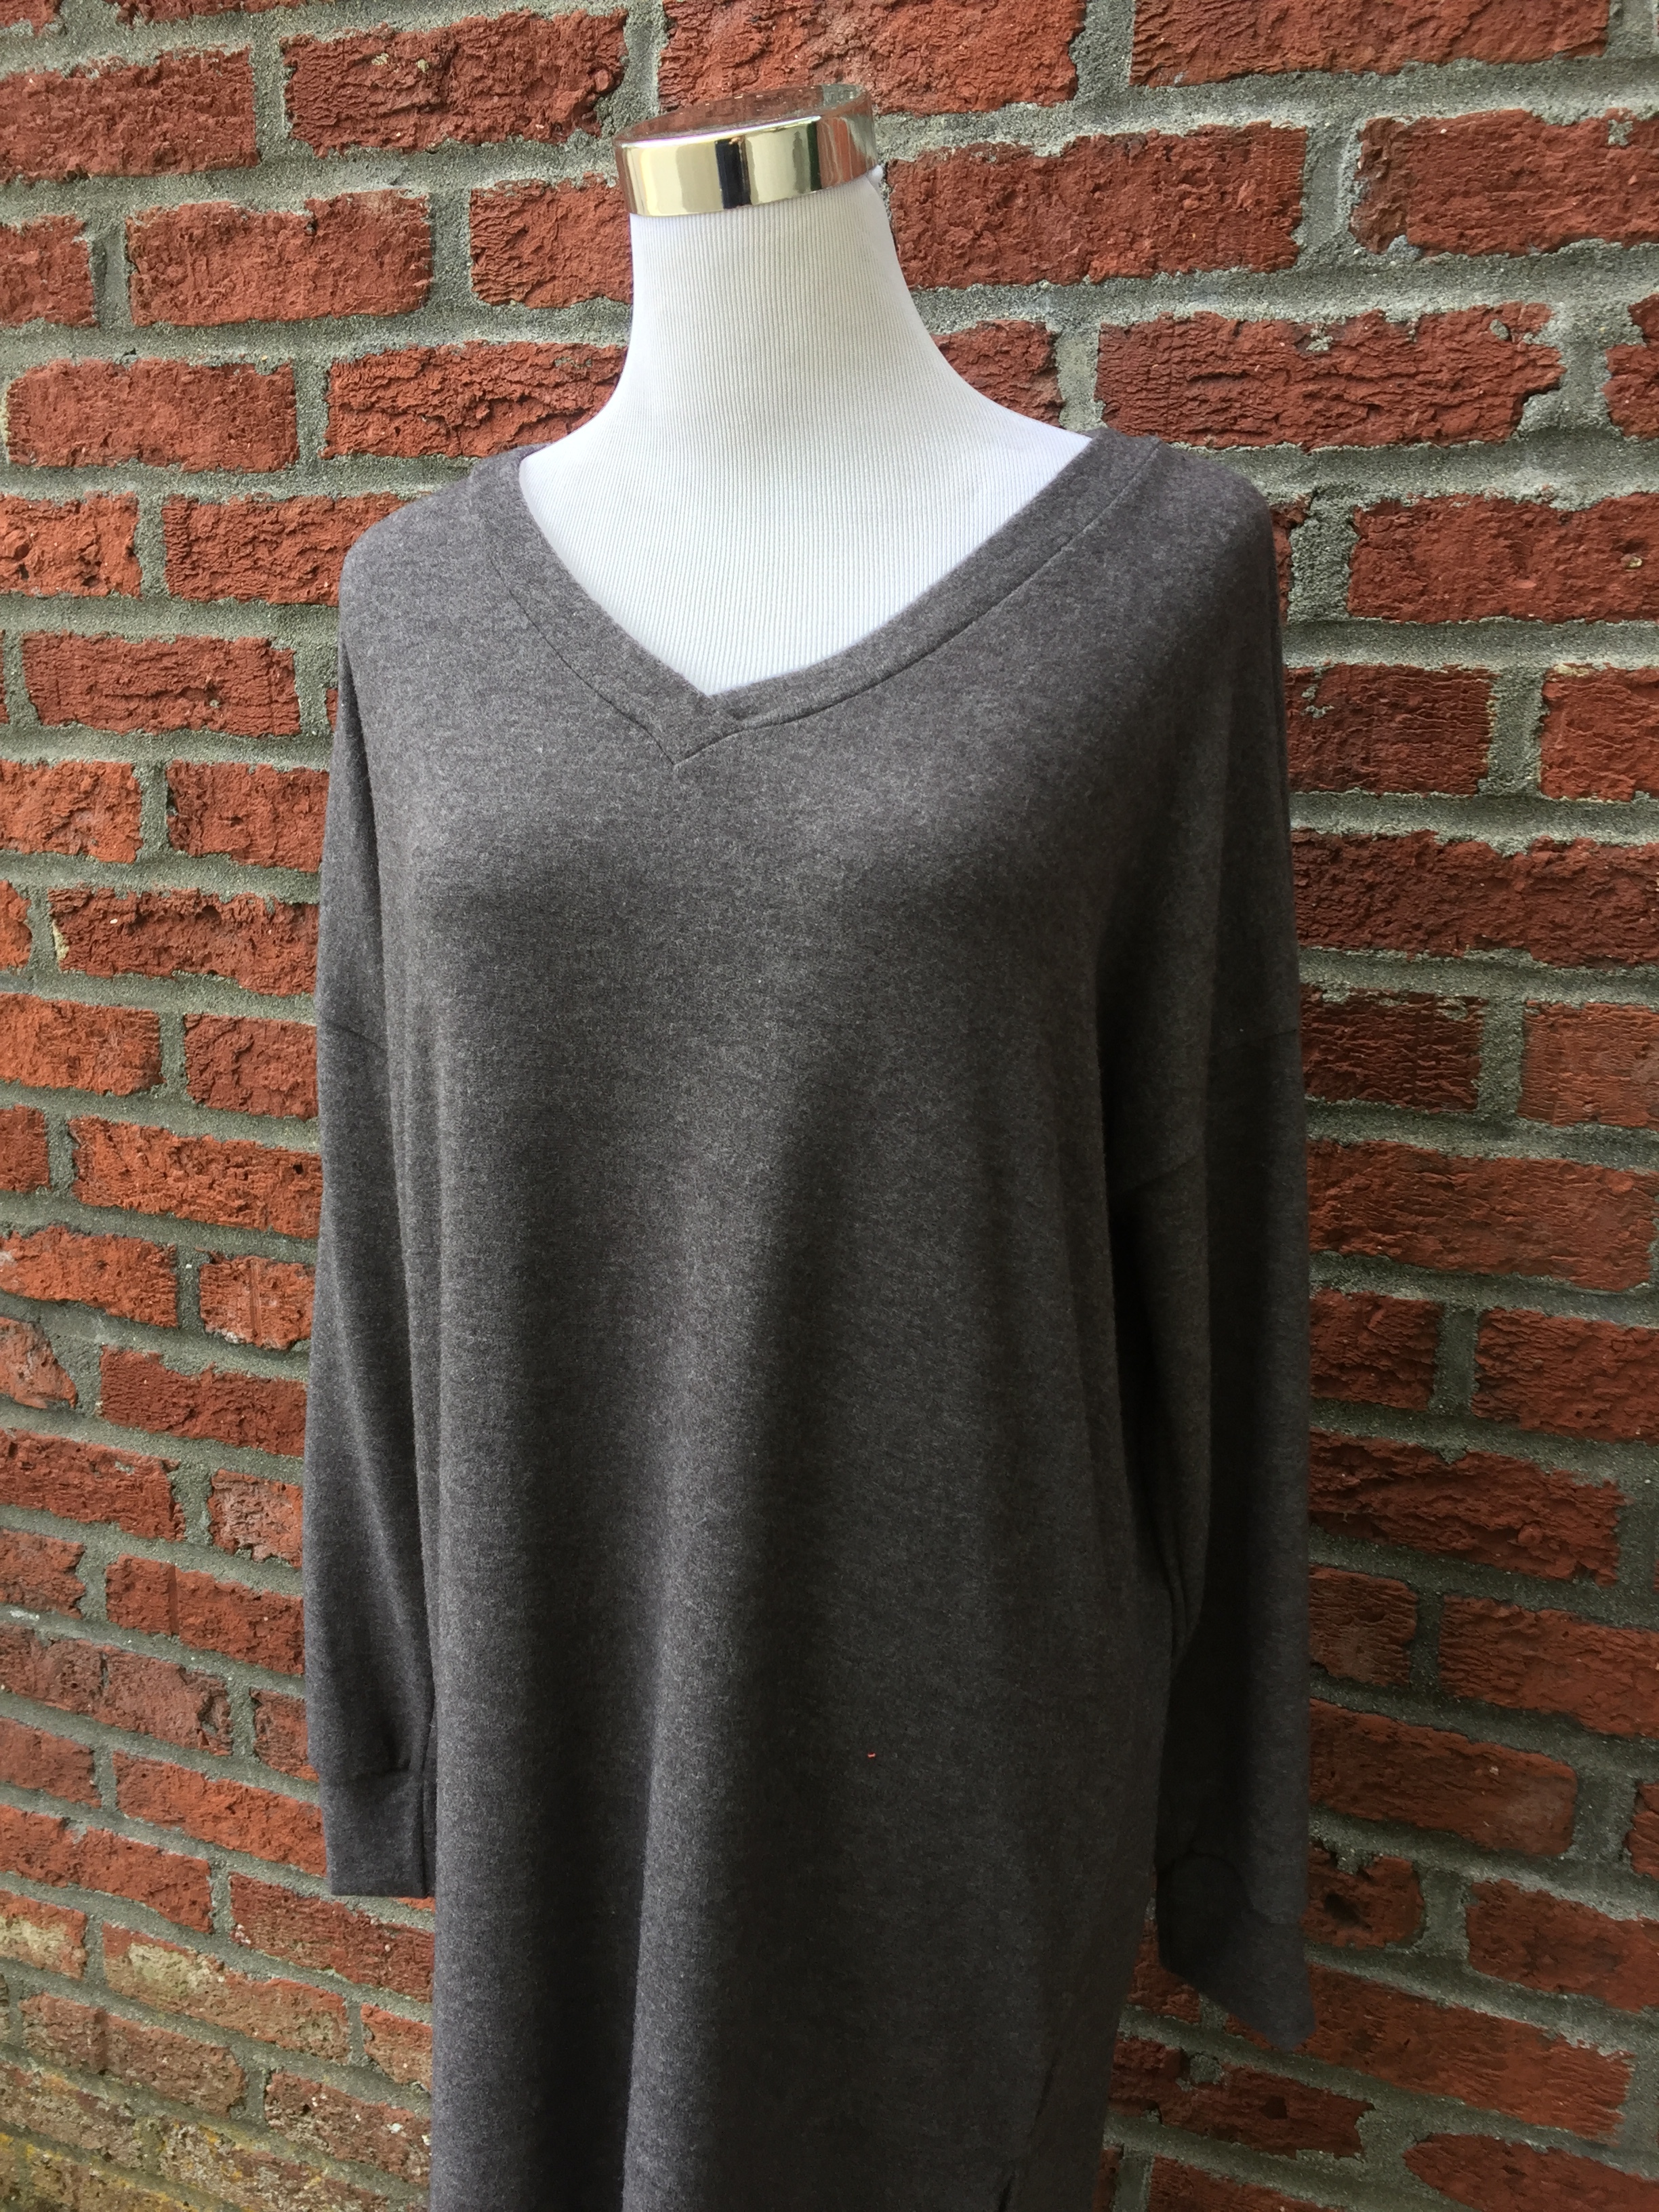 Reb+J tunic sweater ($32, grey and charcoal)